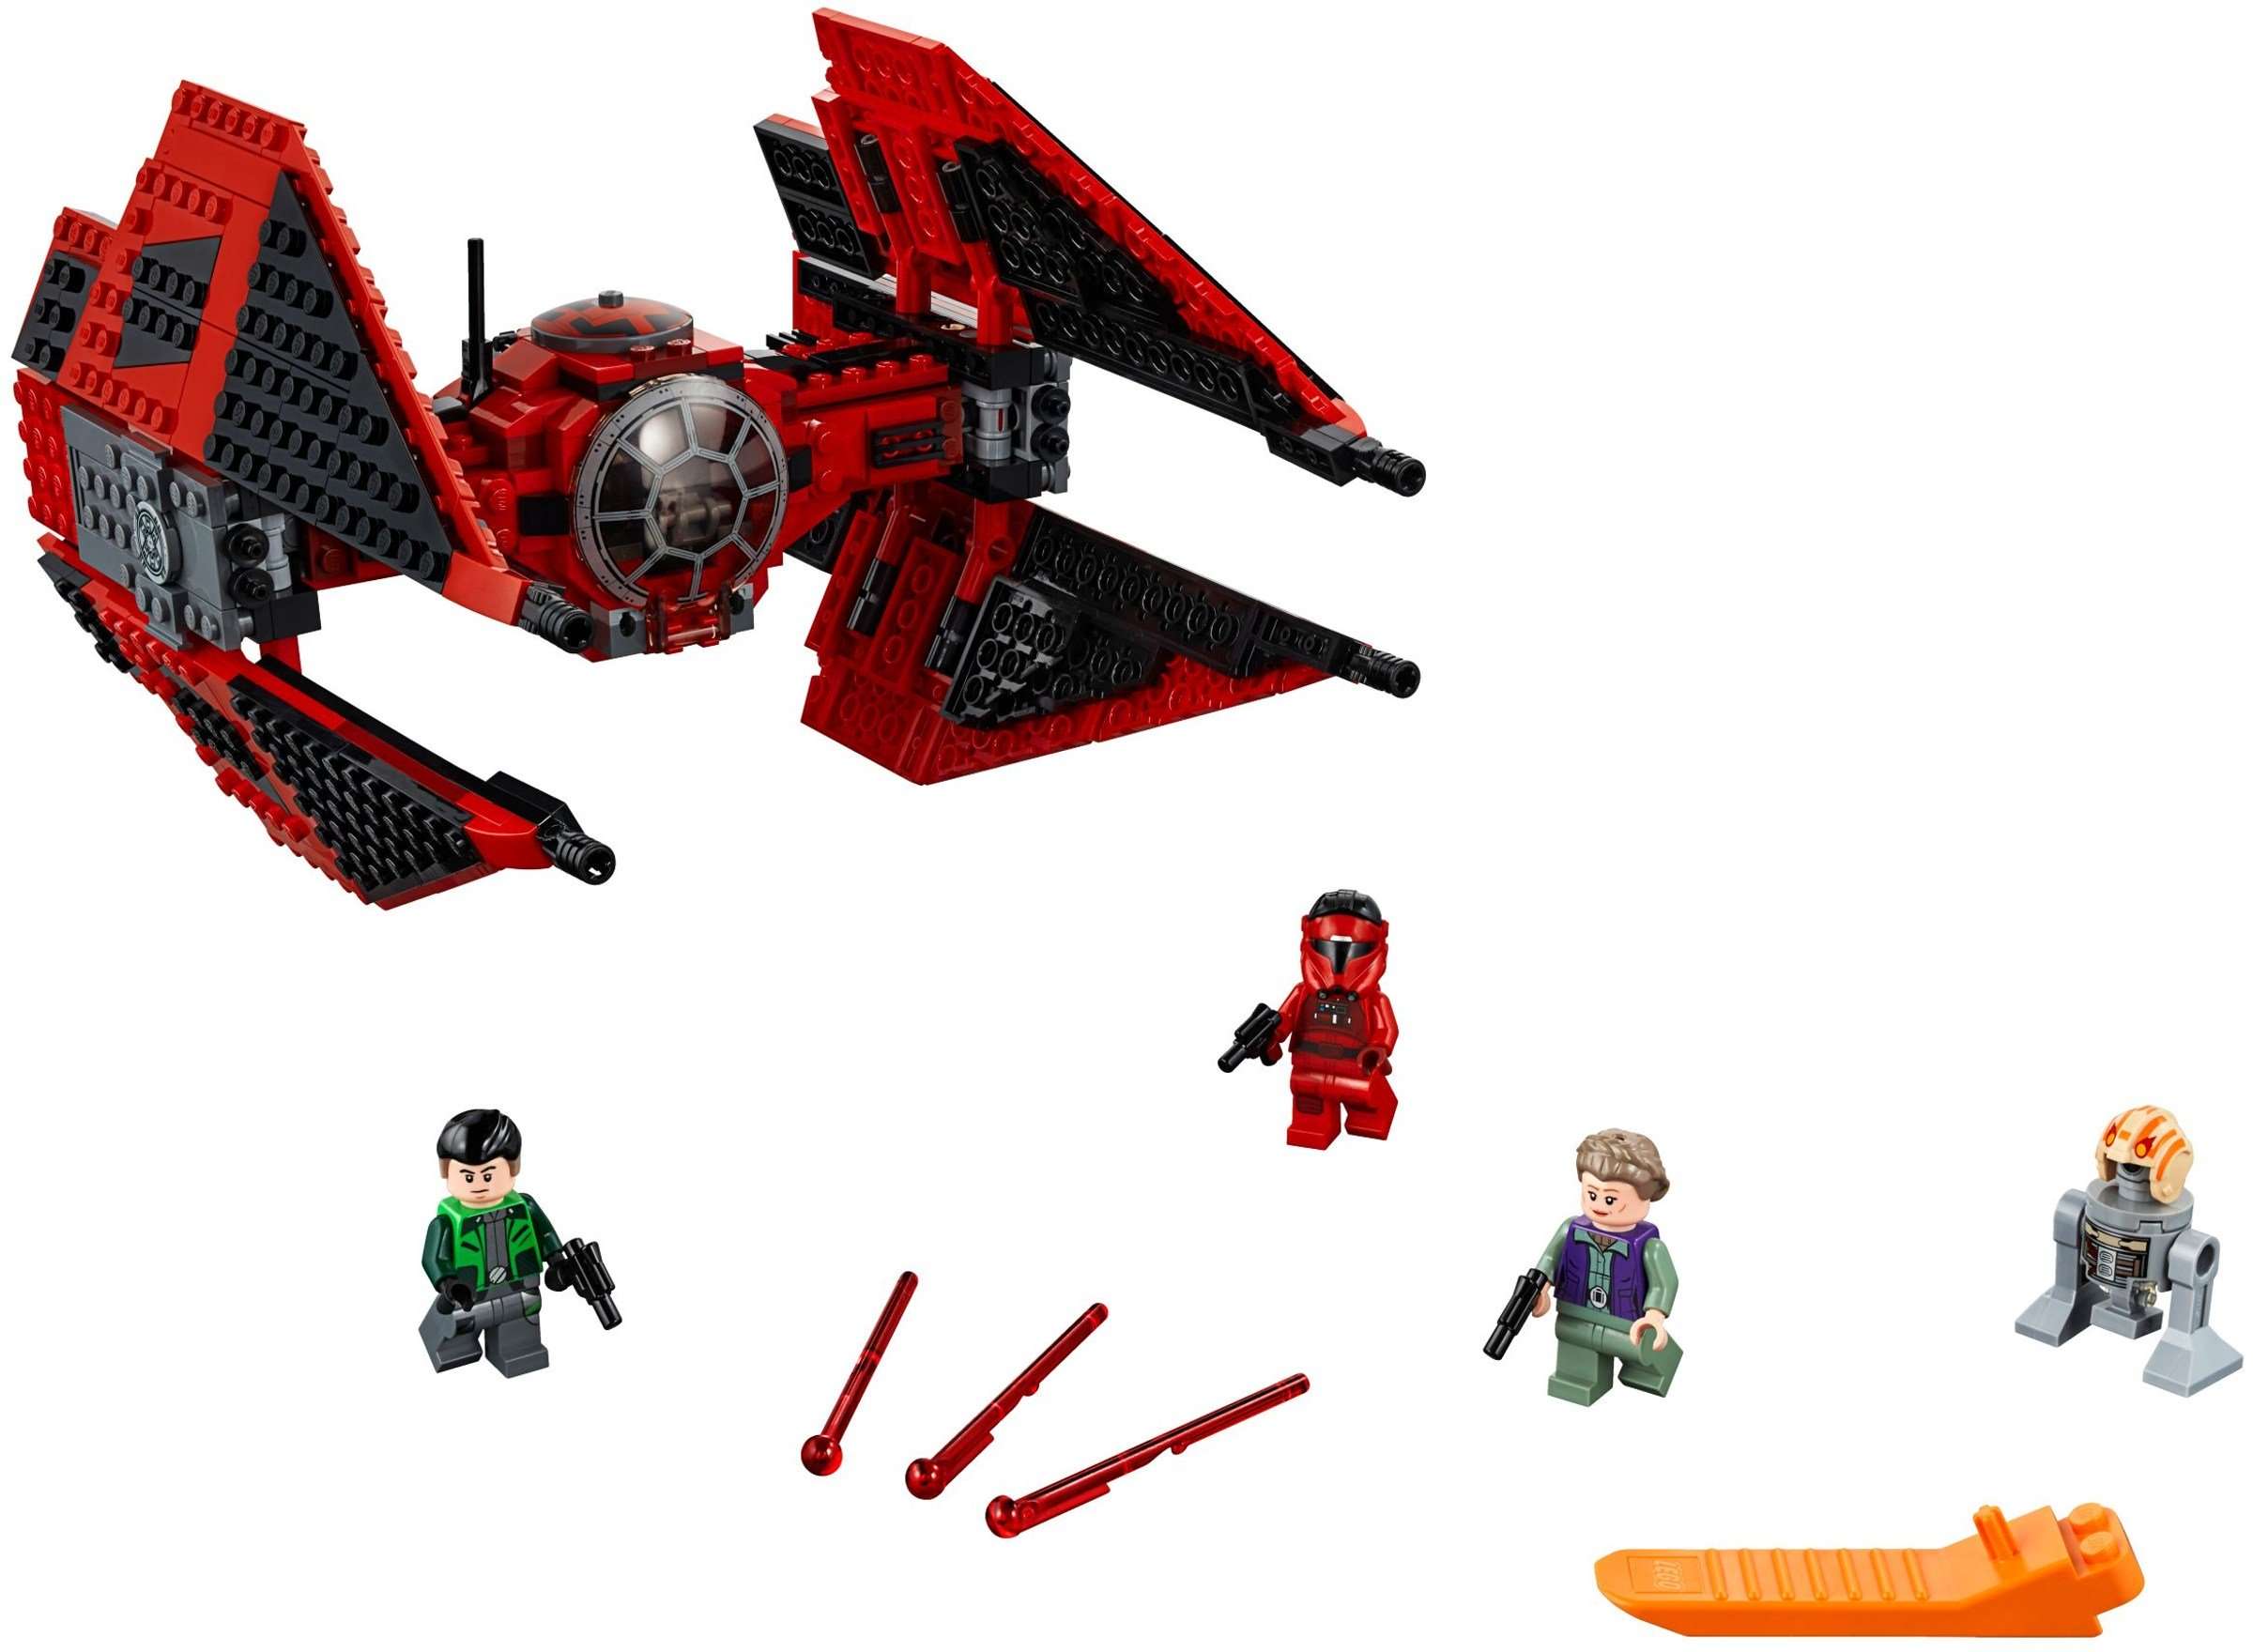 LEGO Star Wars - Major Vonreg